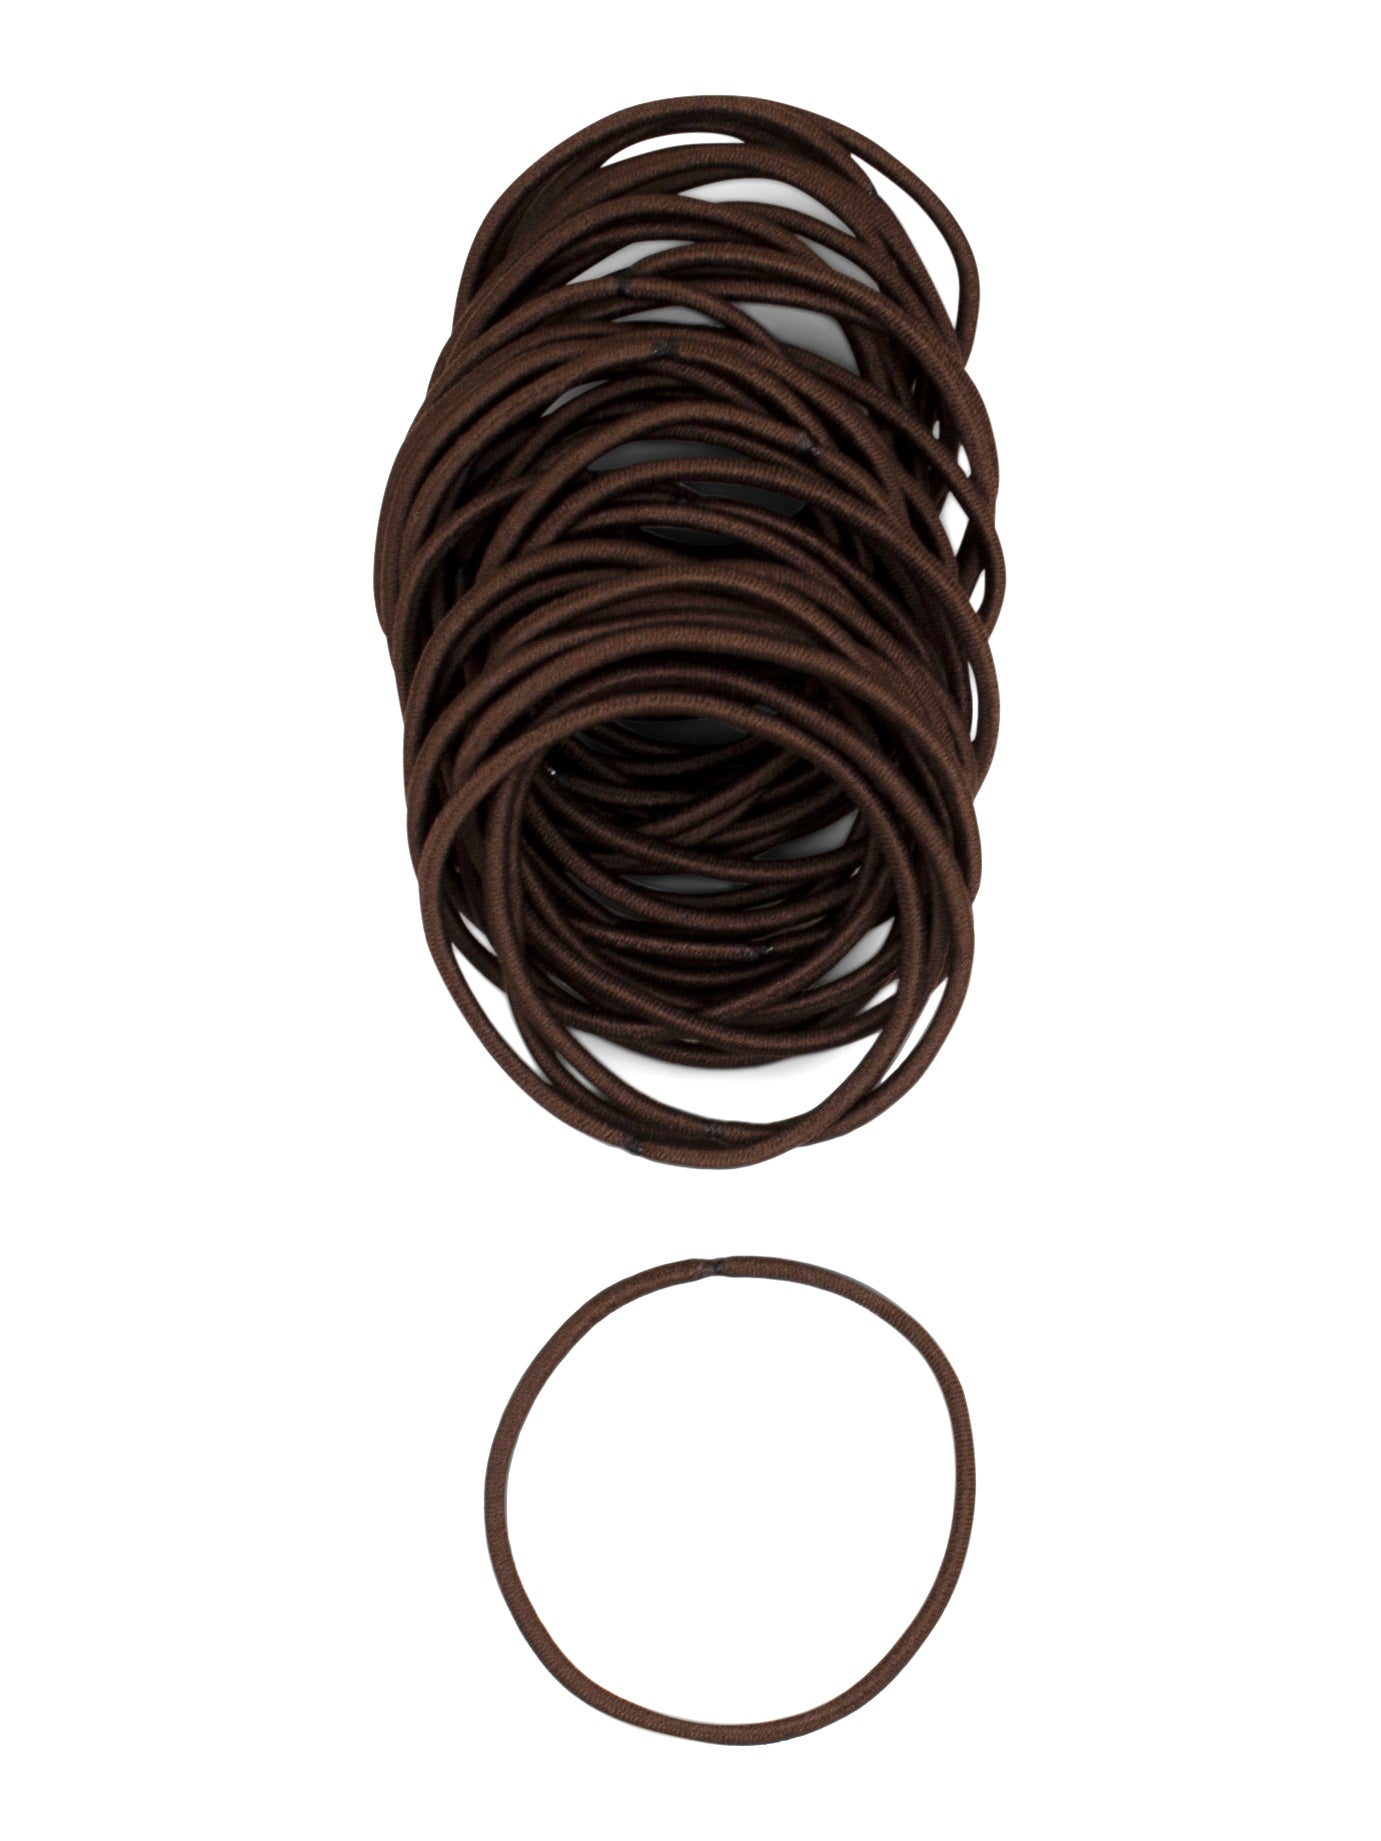 Thin 2mm Hair Ties - 1.75 Inch Elastics - 40 Count